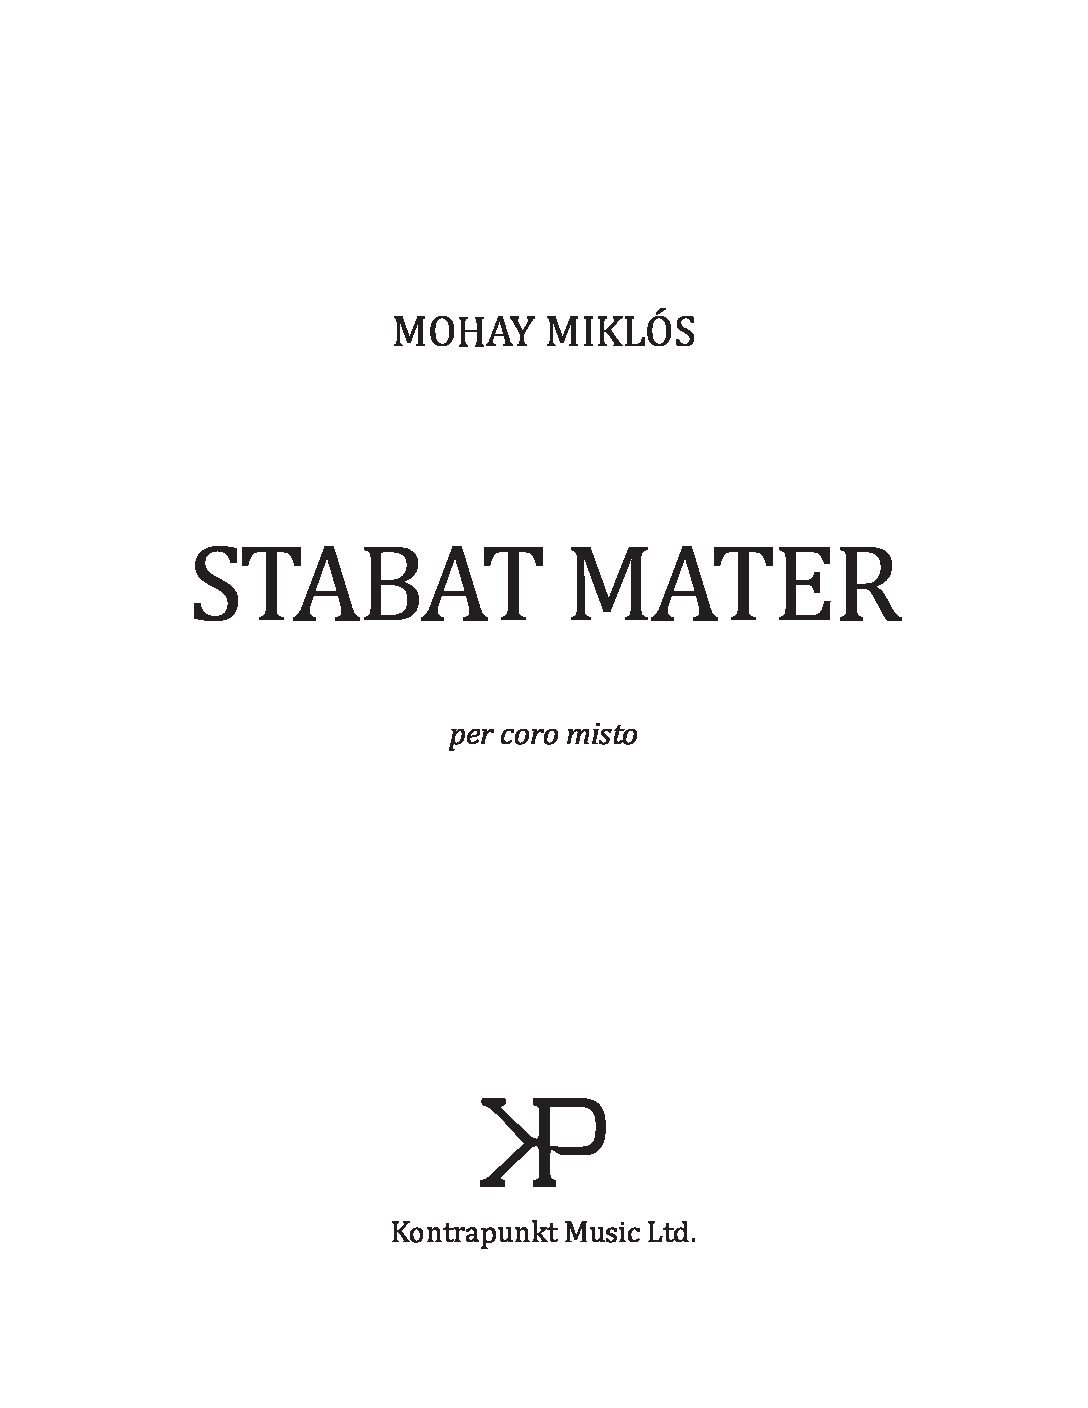 Mohay Miklós: Stabat Mater - per coro misto